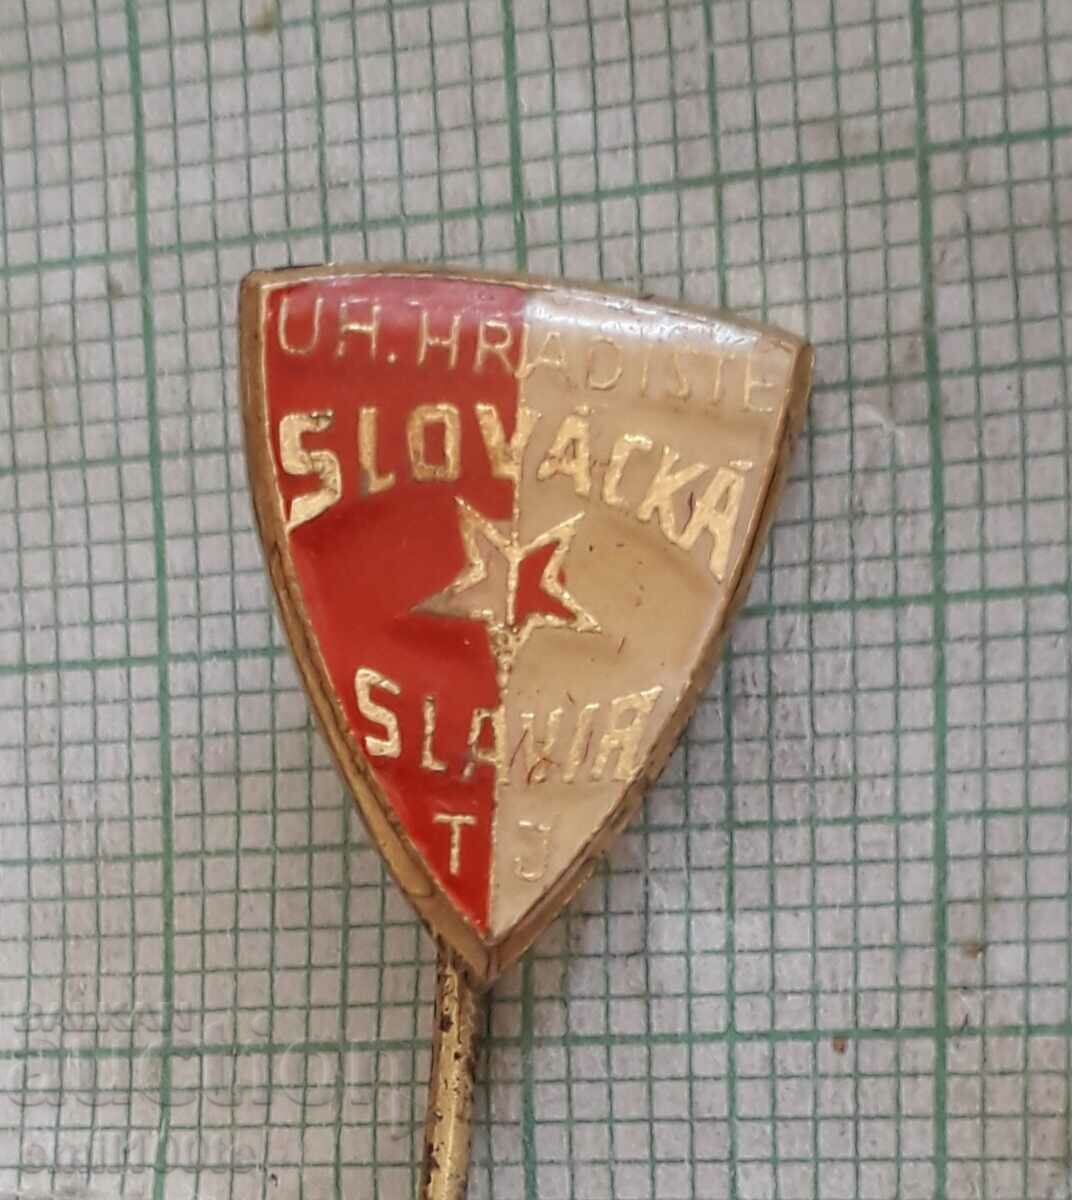 Badge - Football club Slovacka Slavia Czech Republic